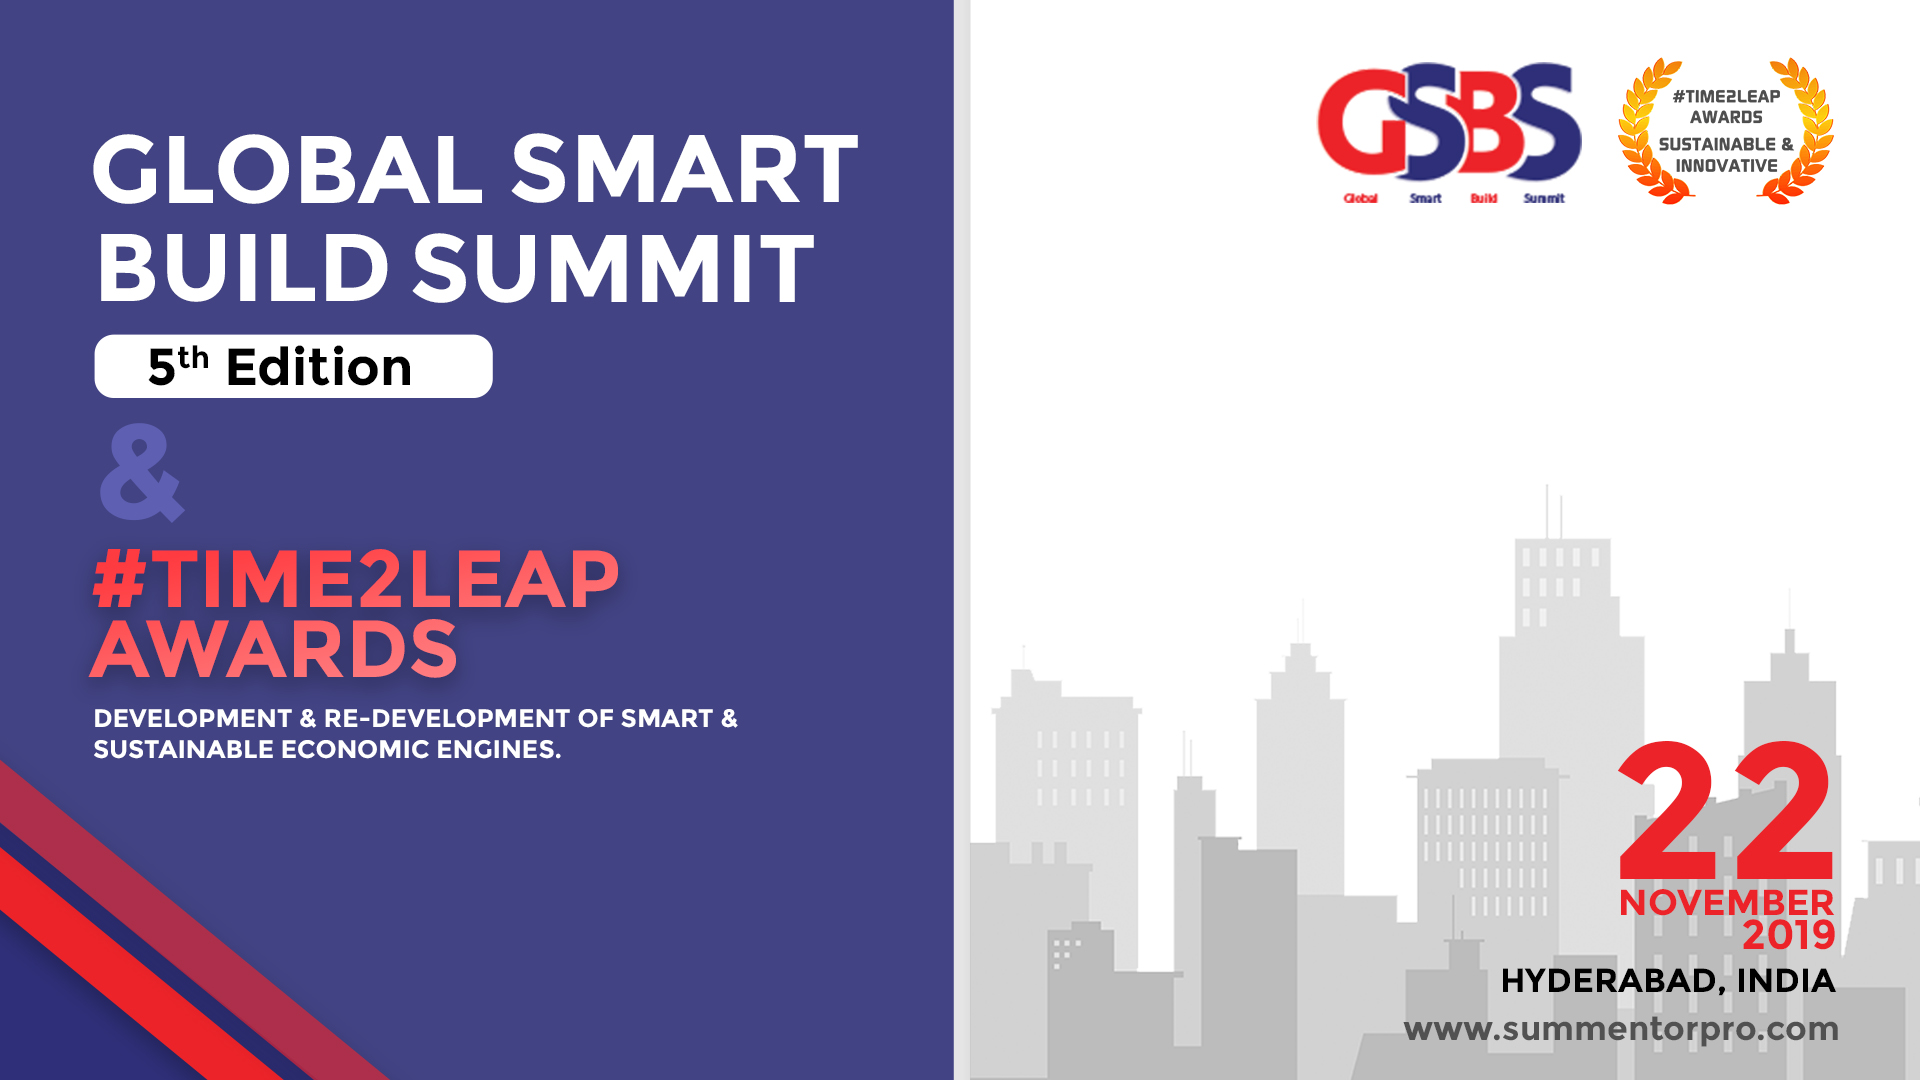 Global Smart Build Summit 5th edition & #Time2leap awards, Hyderabad, Telangana, India